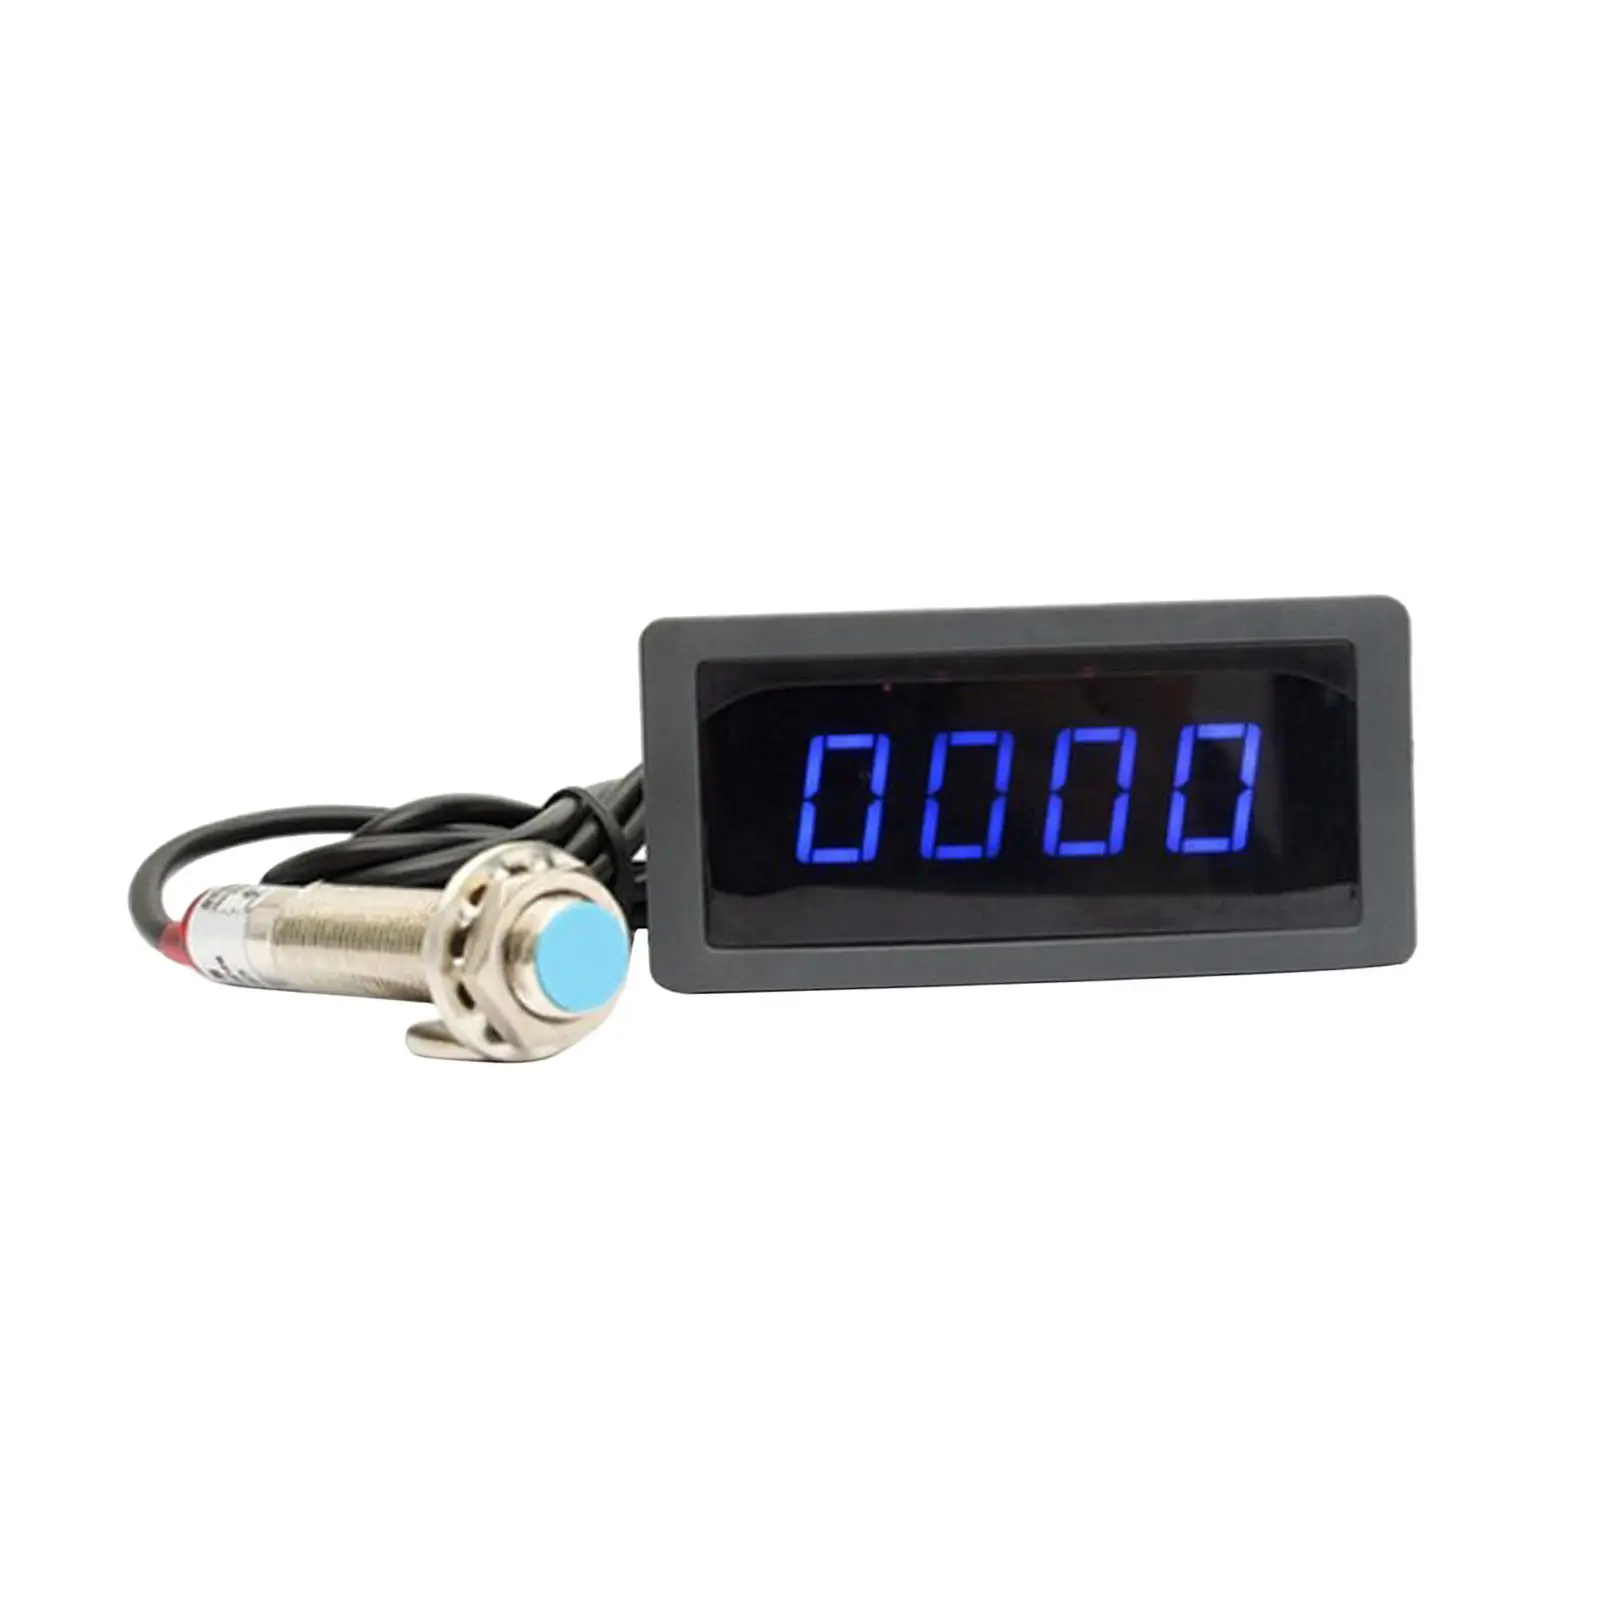 Compact 0.56inch Digital Tachometer RPM Meter LED Tachometer RPM Speed Meter